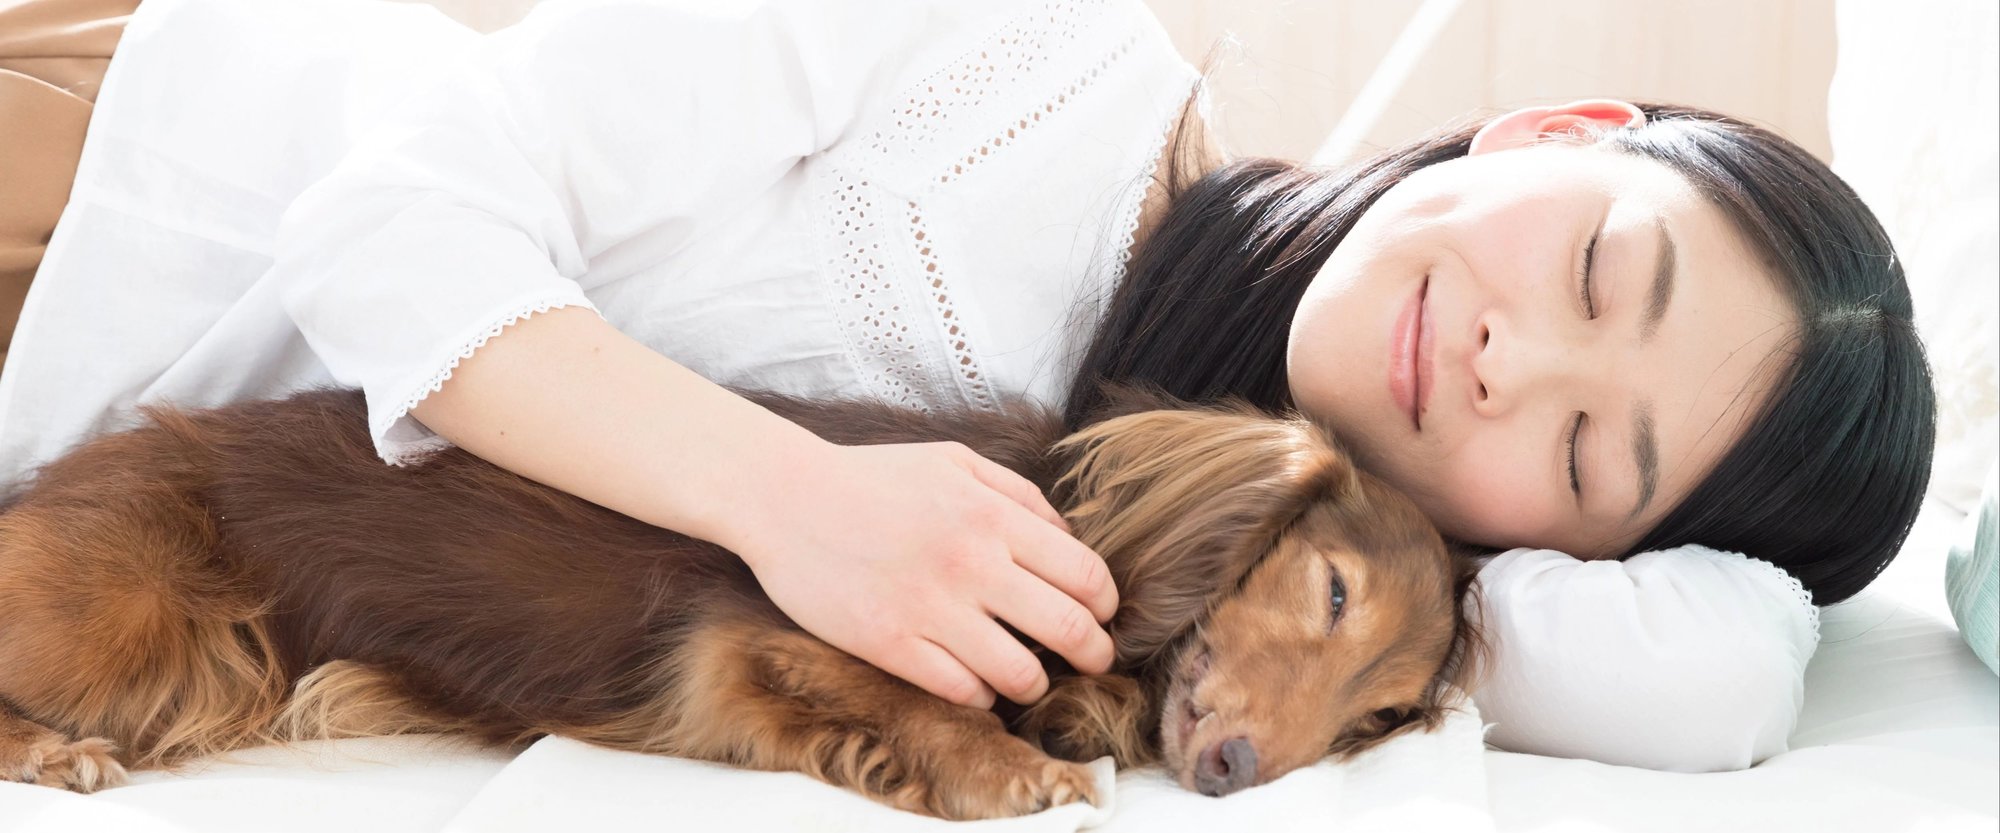 Woman sleeping and cuddling with dog